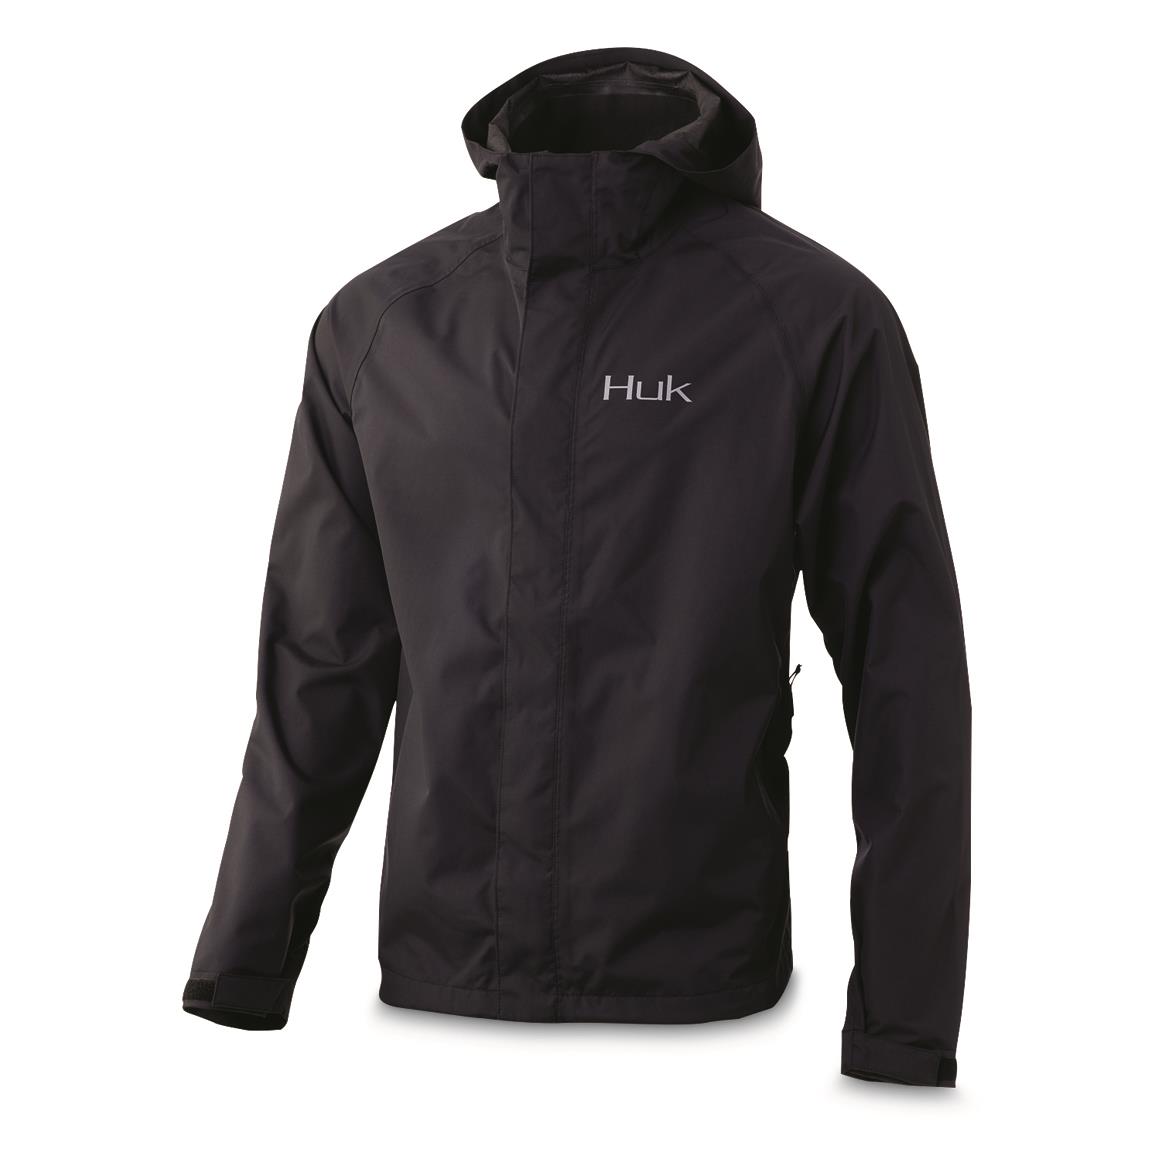 Huk Men's Gunwale Waterproof Rain Jacket, Black